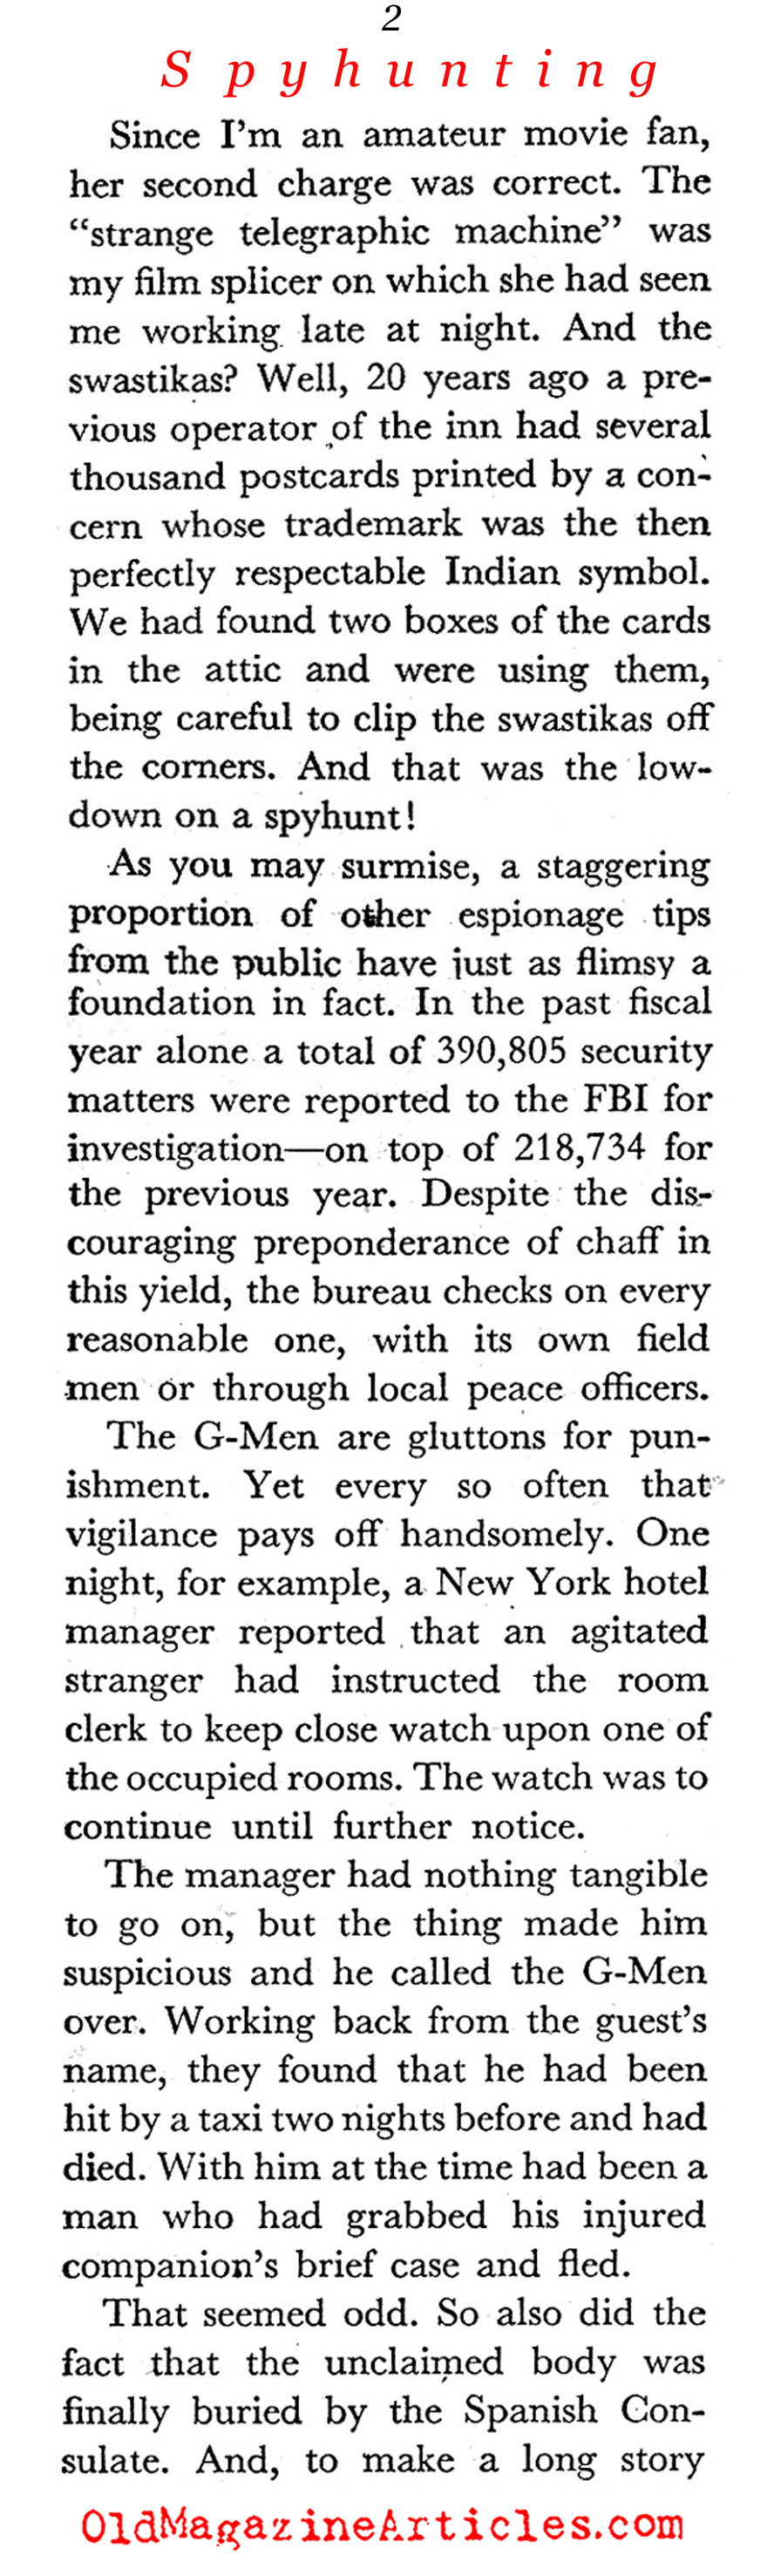 Home Front Spy-Hunters (Coronet Magazine, 1944)